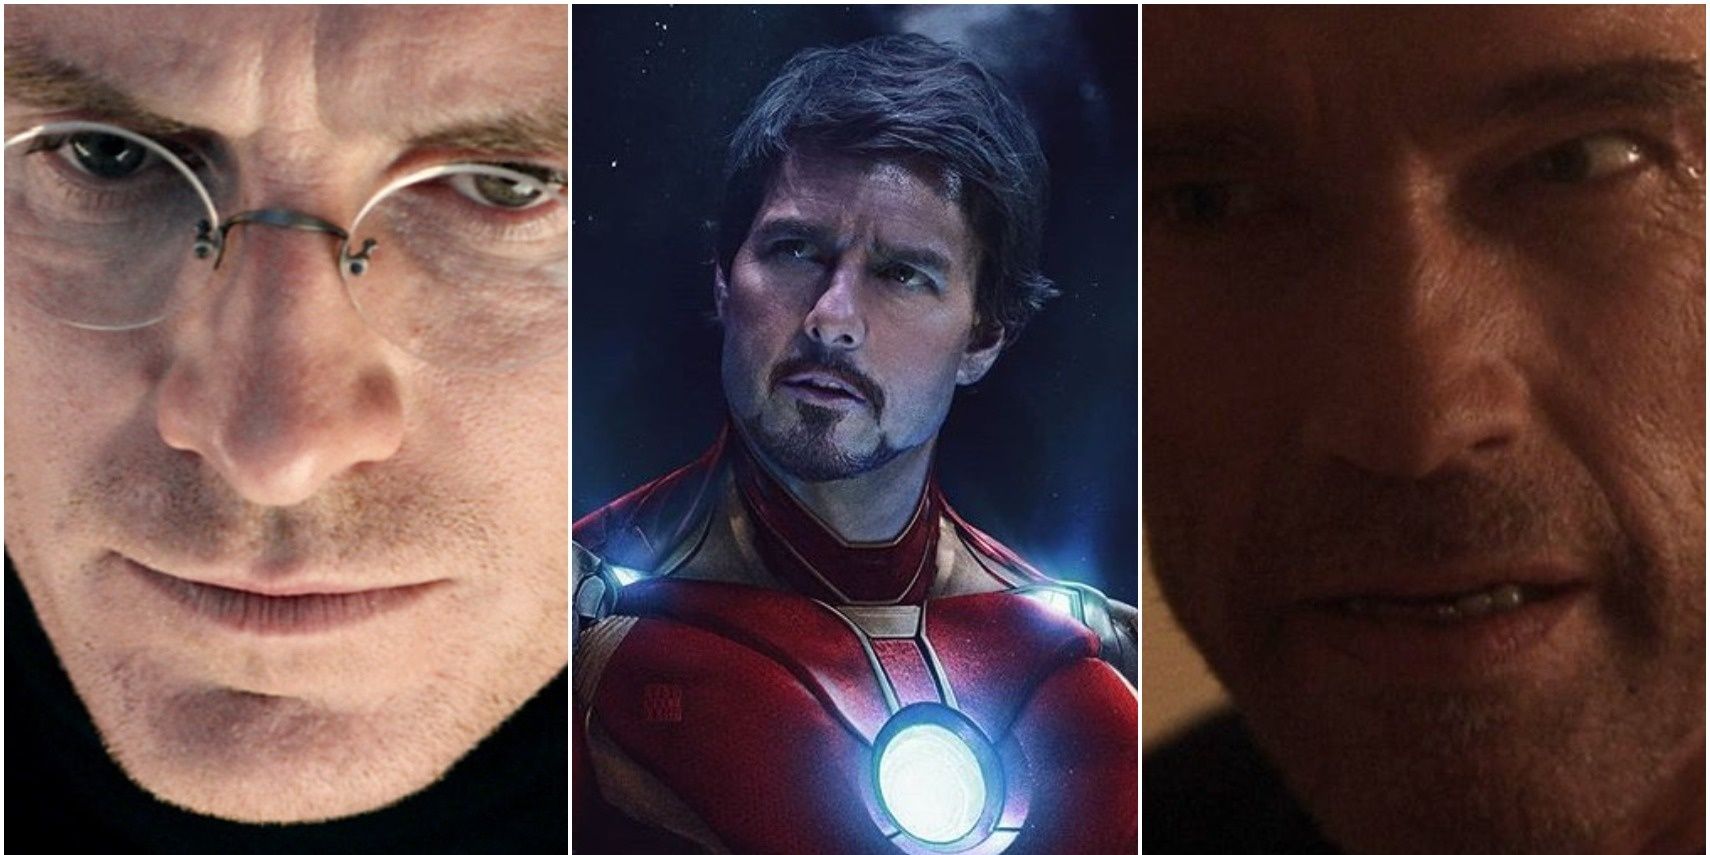 Michael Fassbender/Tom Cruise as Iron Man/Arnold Schwarzenegger